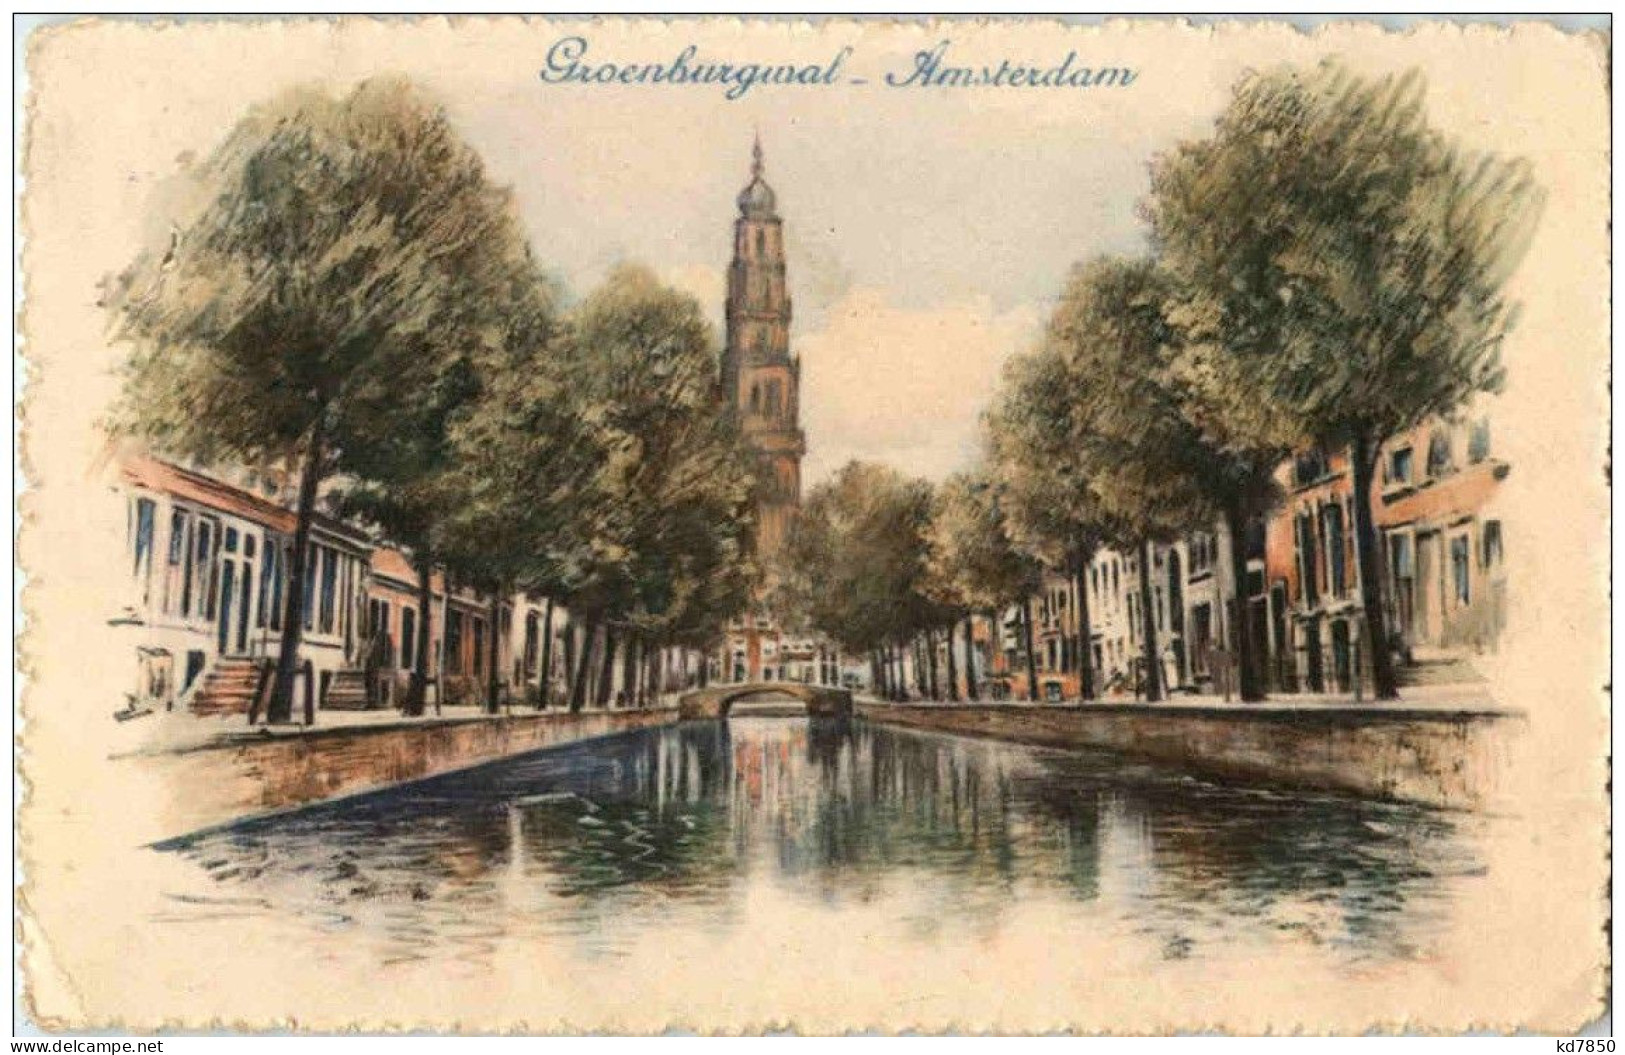 Amsterdam - Groenburgwall - Amsterdam